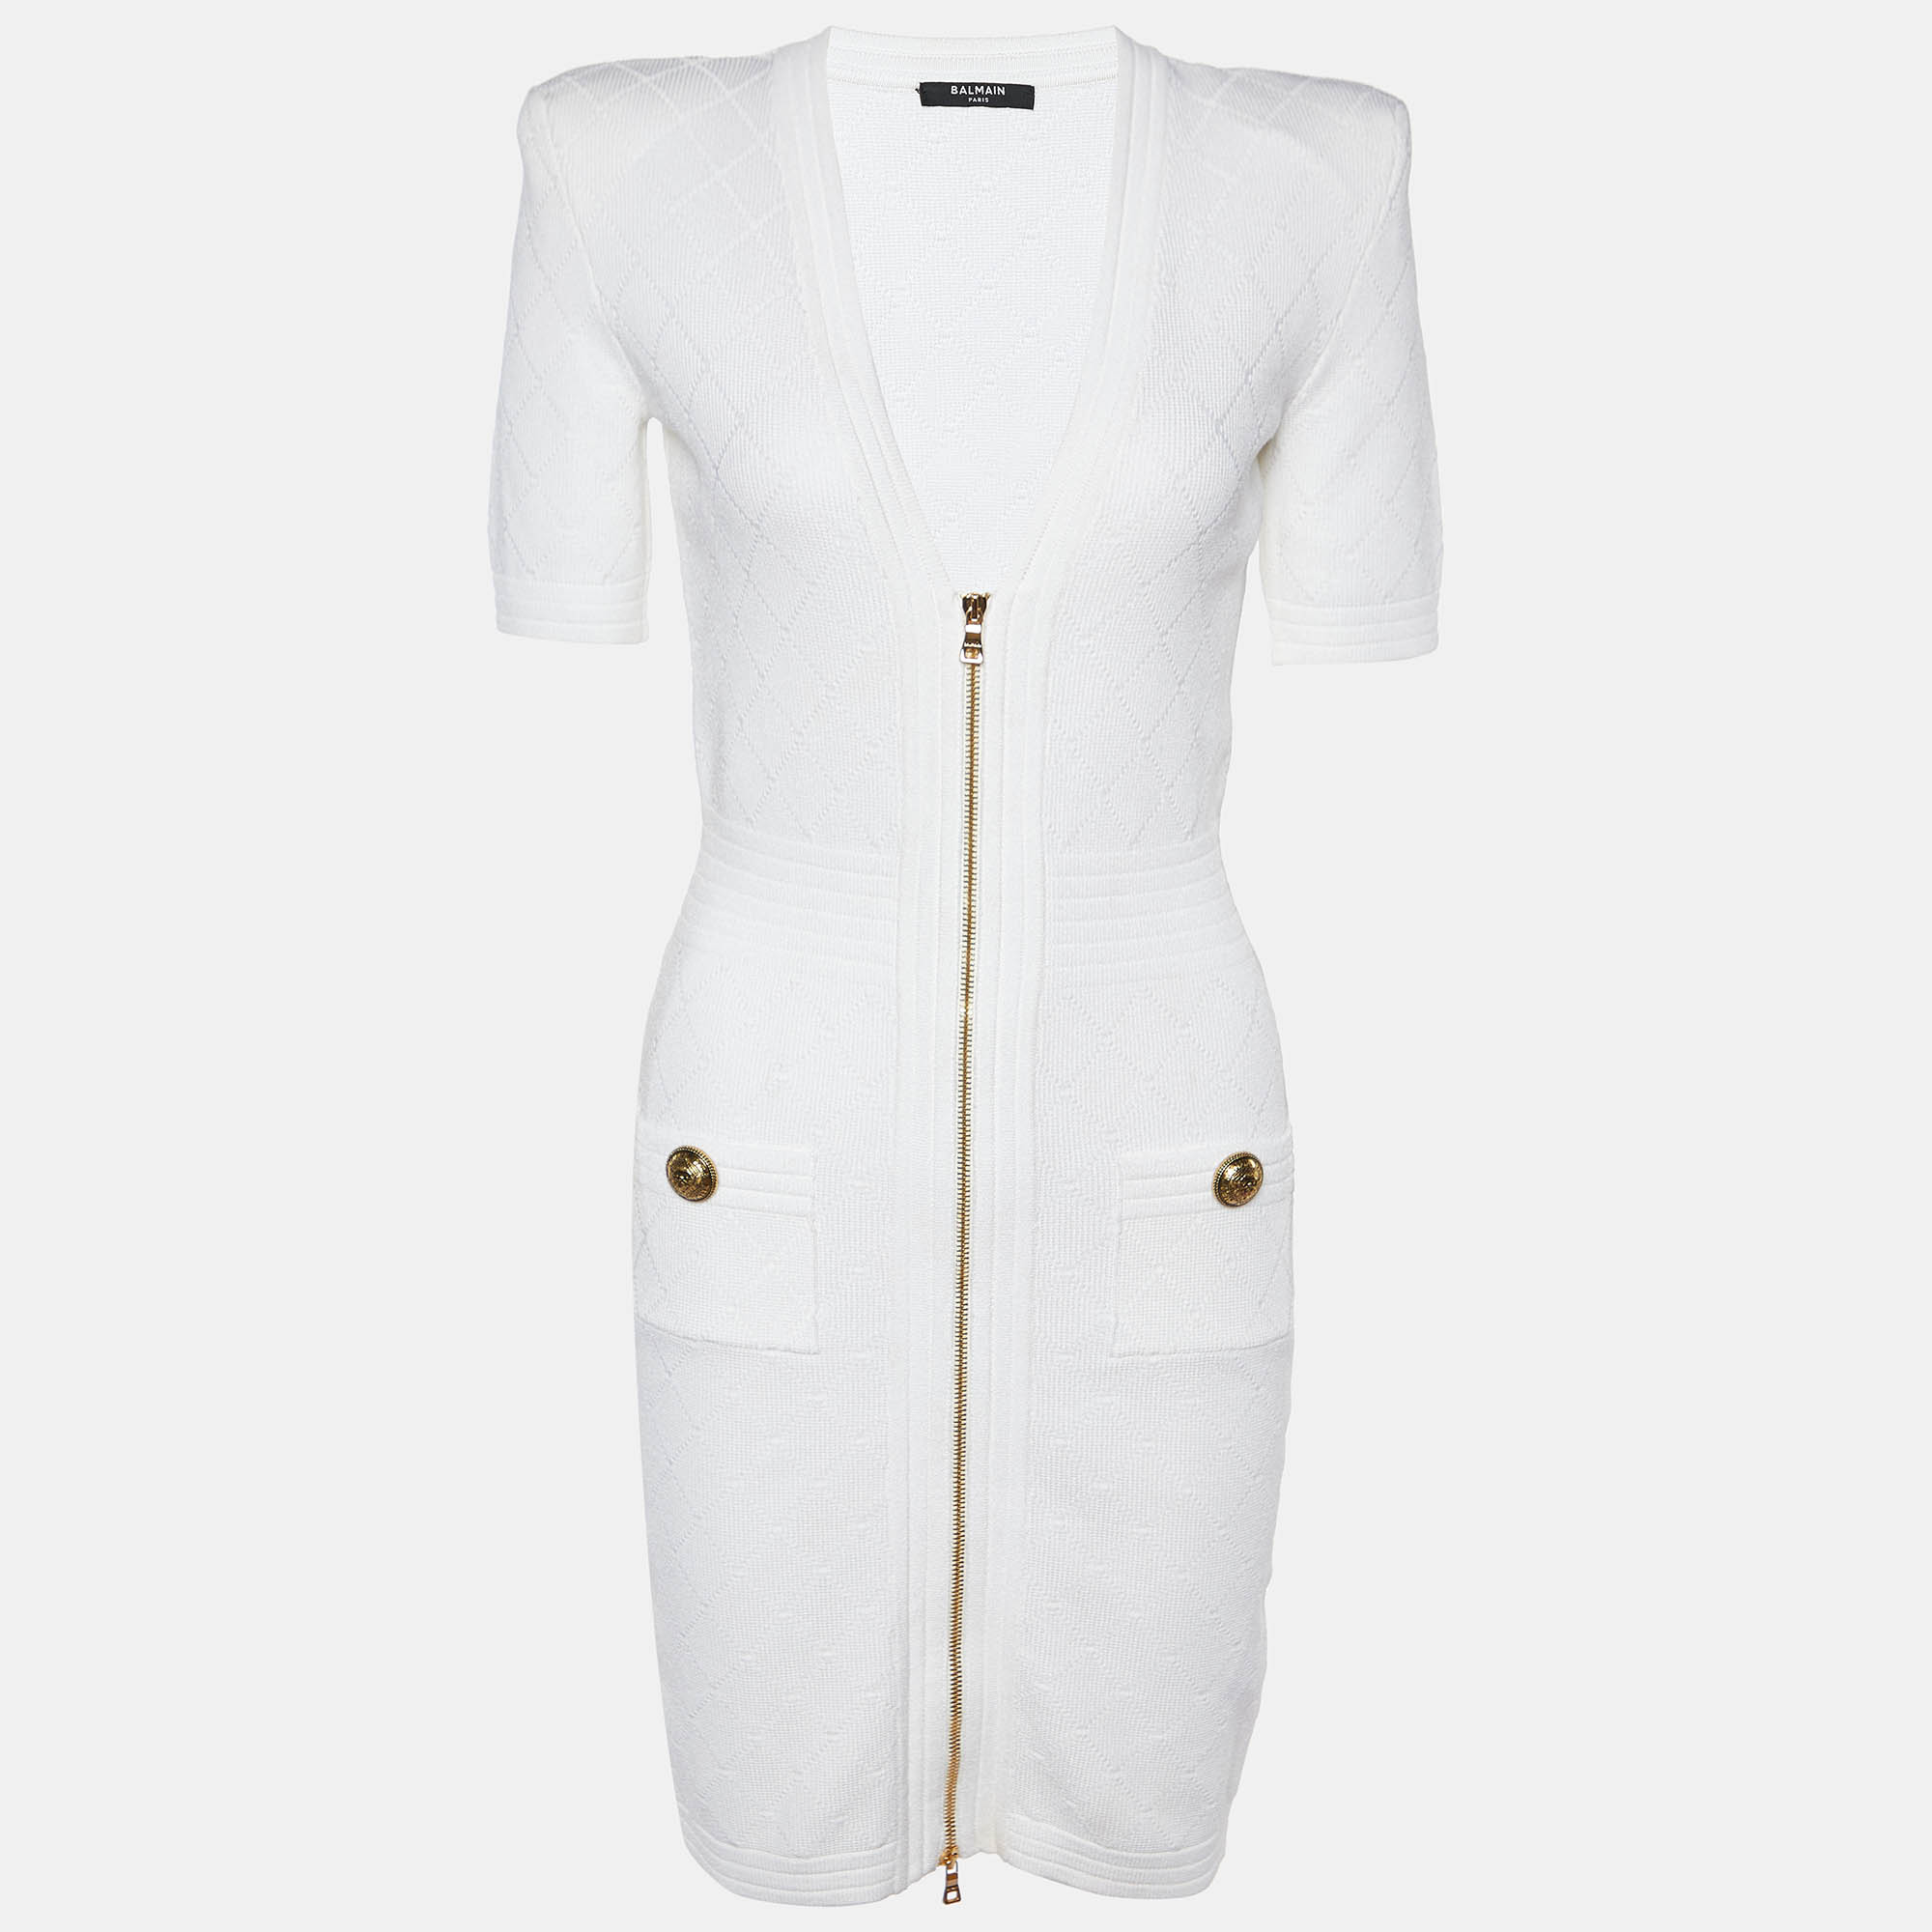 Balmain white jacquard knit zip front short dress s